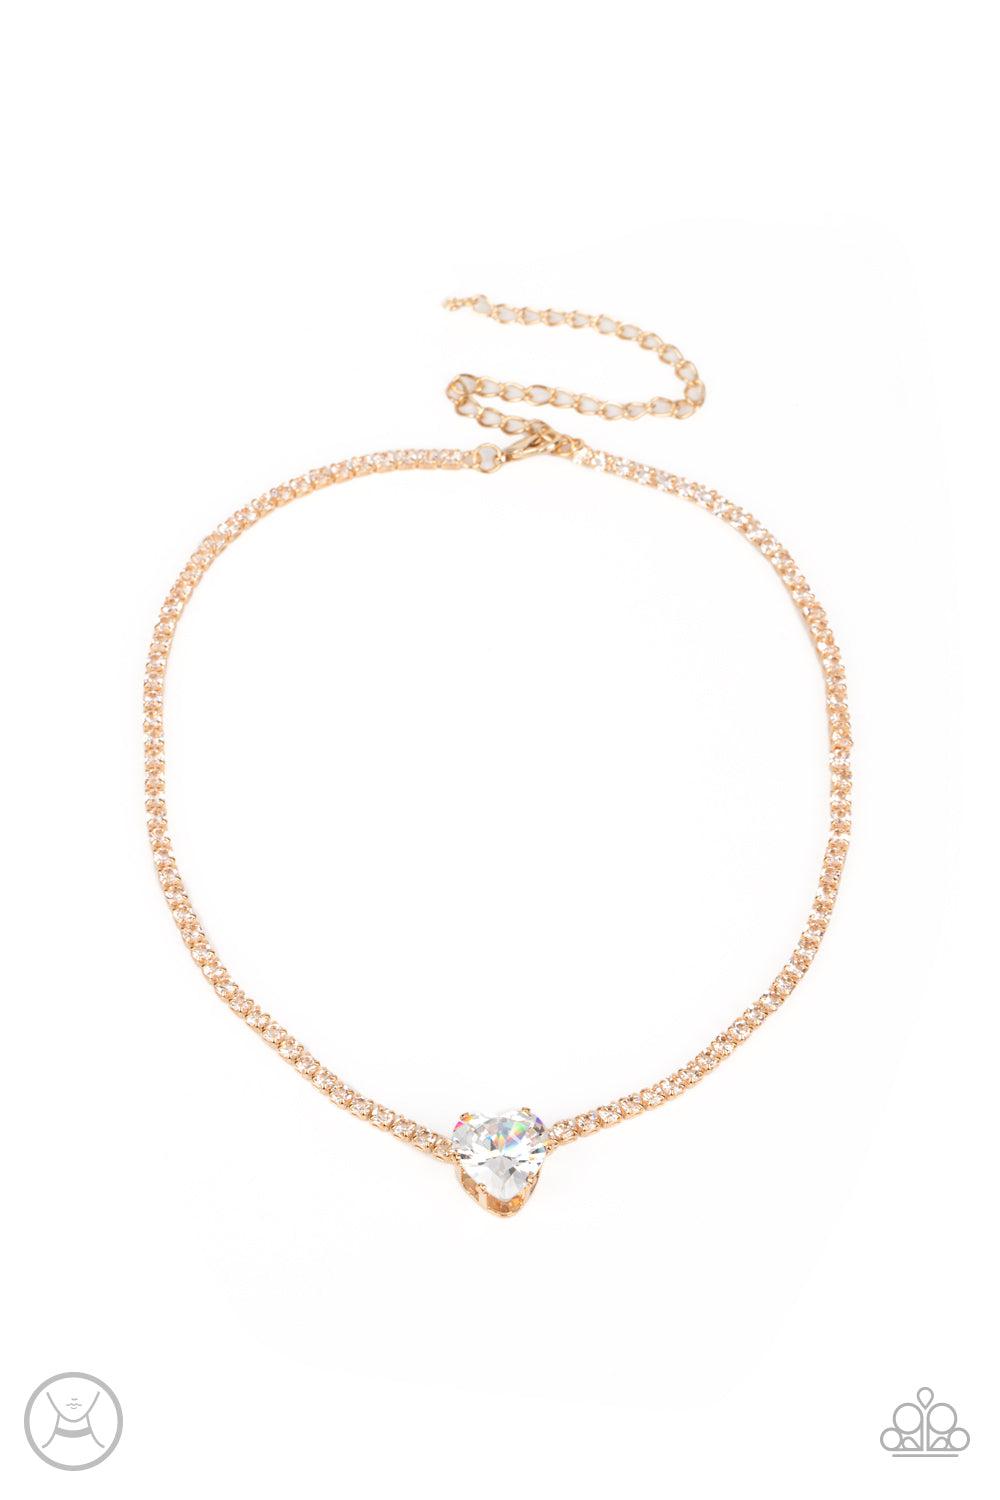 Flirty Fiance Gold &amp; White Rhinestone Heart Choker Necklace - Paparazzi Accessories- lightbox - CarasShop.com - $5 Jewelry by Cara Jewels